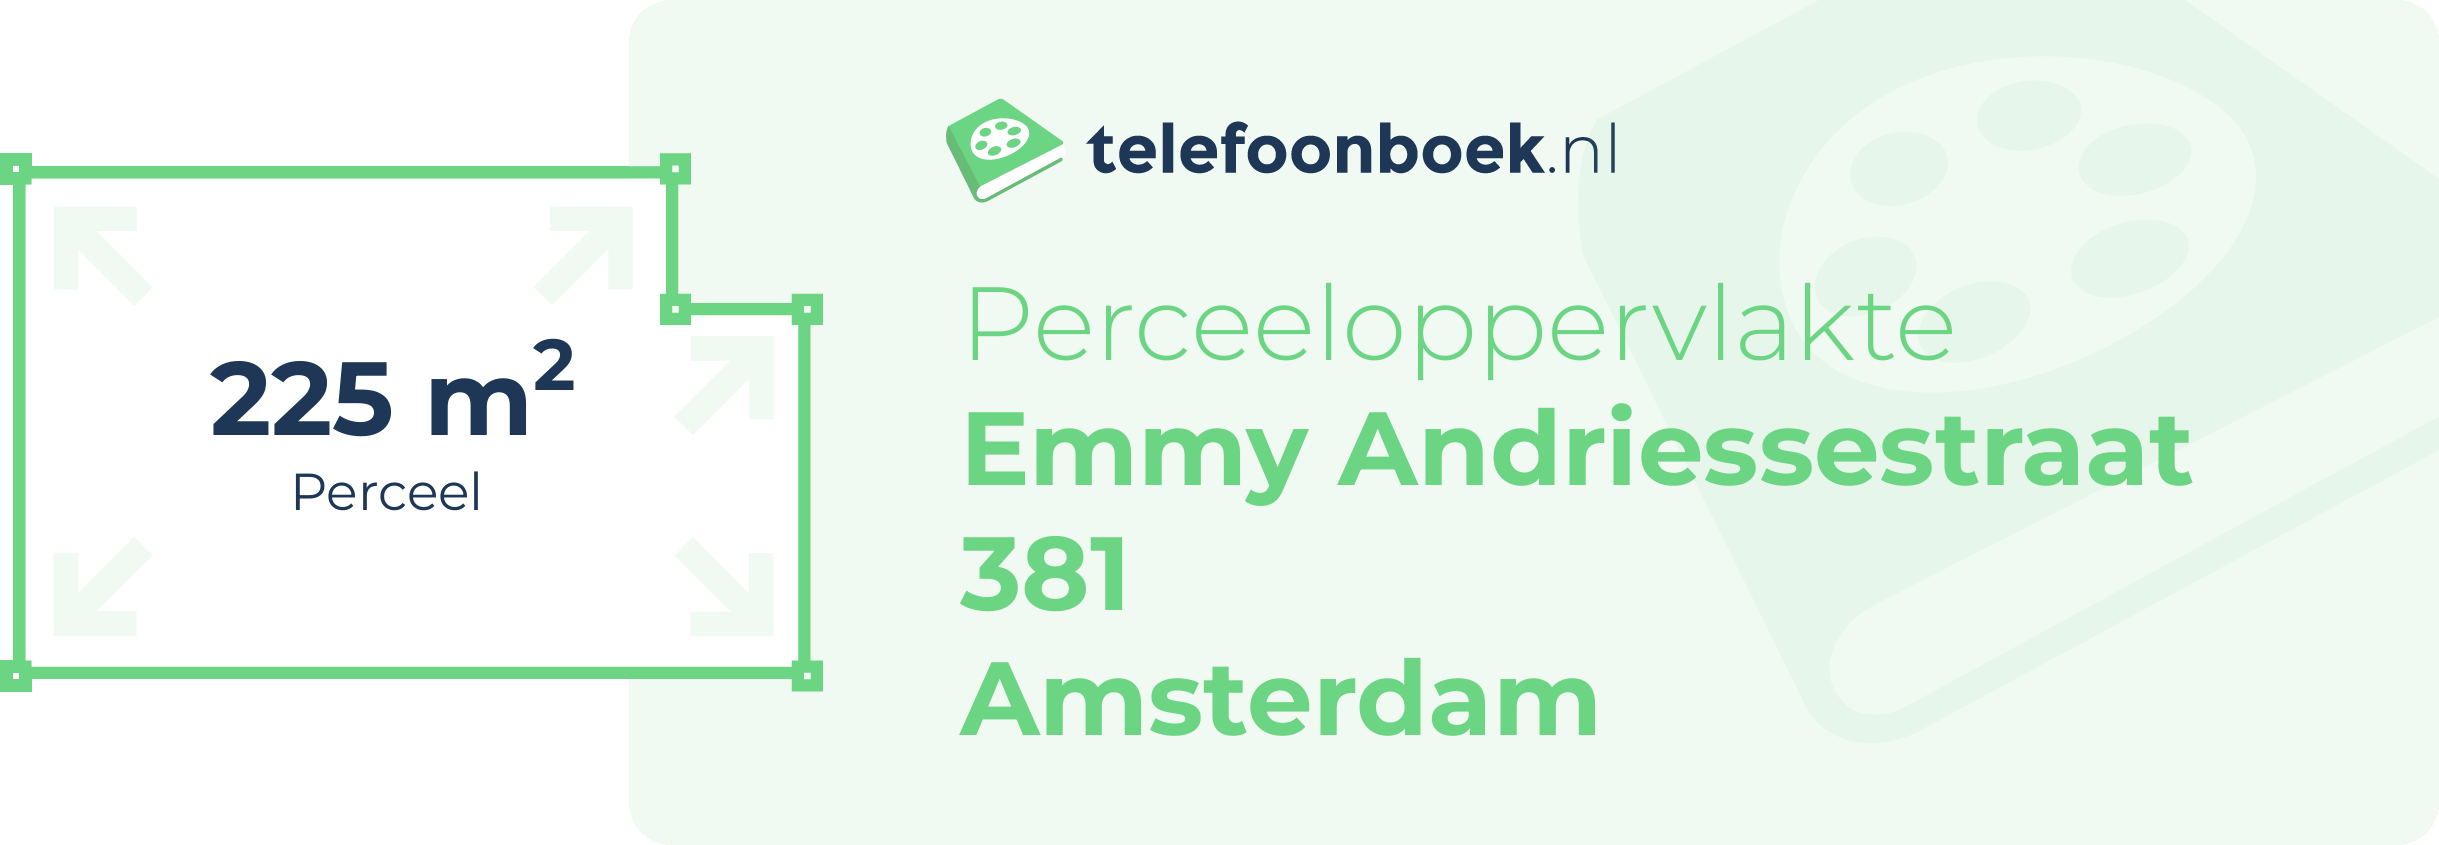 Perceeloppervlakte Emmy Andriessestraat 381 Amsterdam